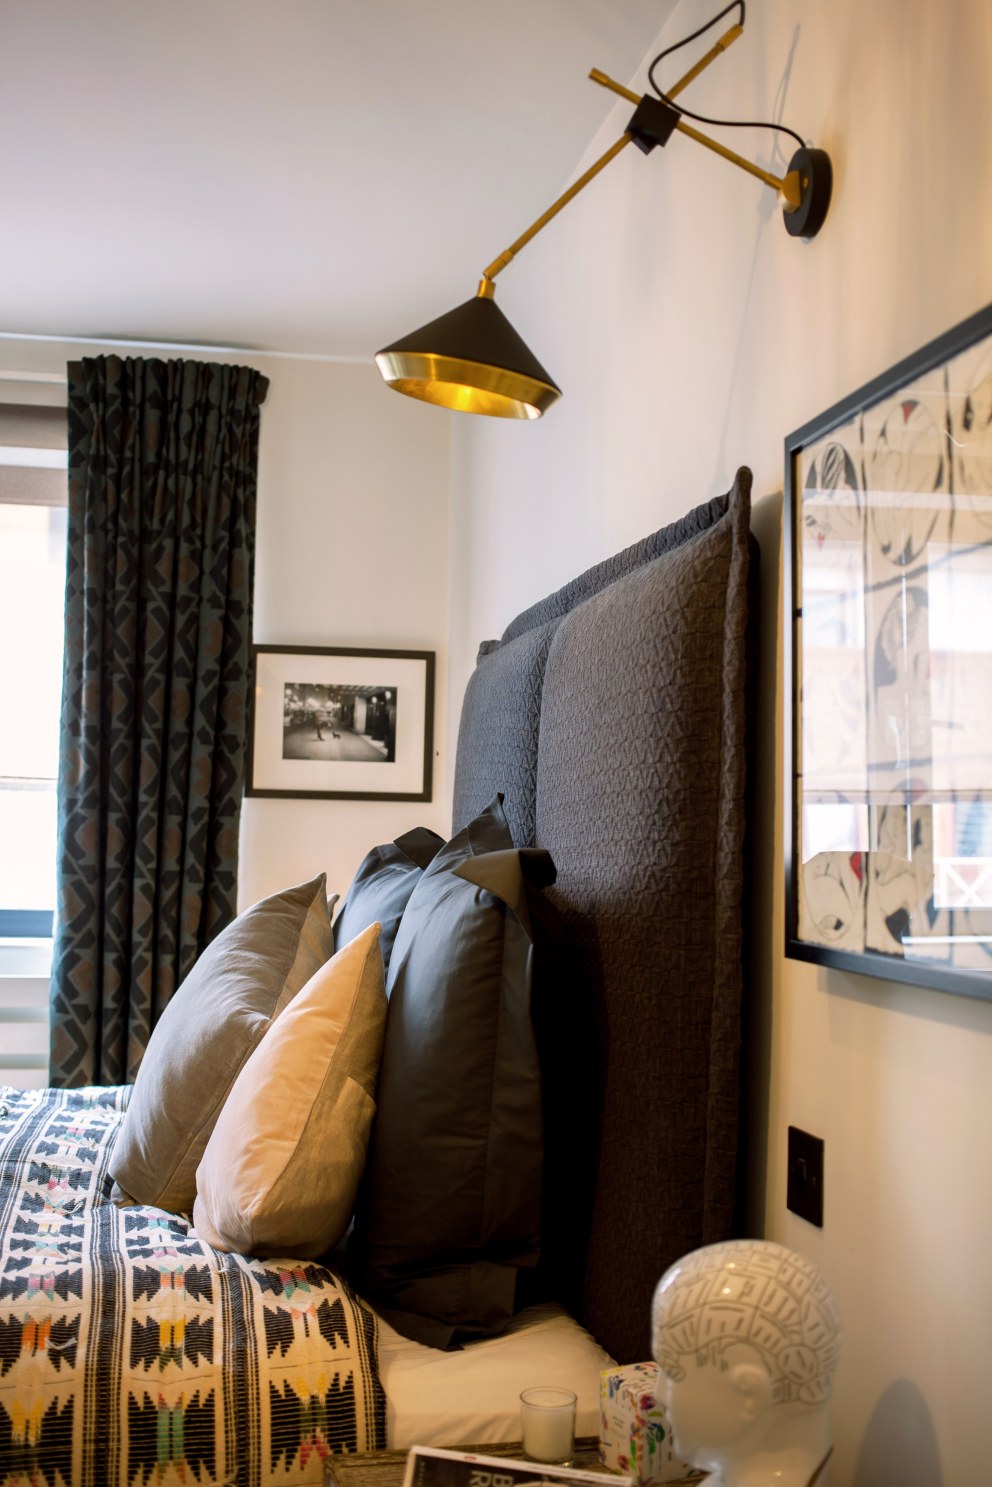 Fulham Riverside | Master bedroom | Interior Designers